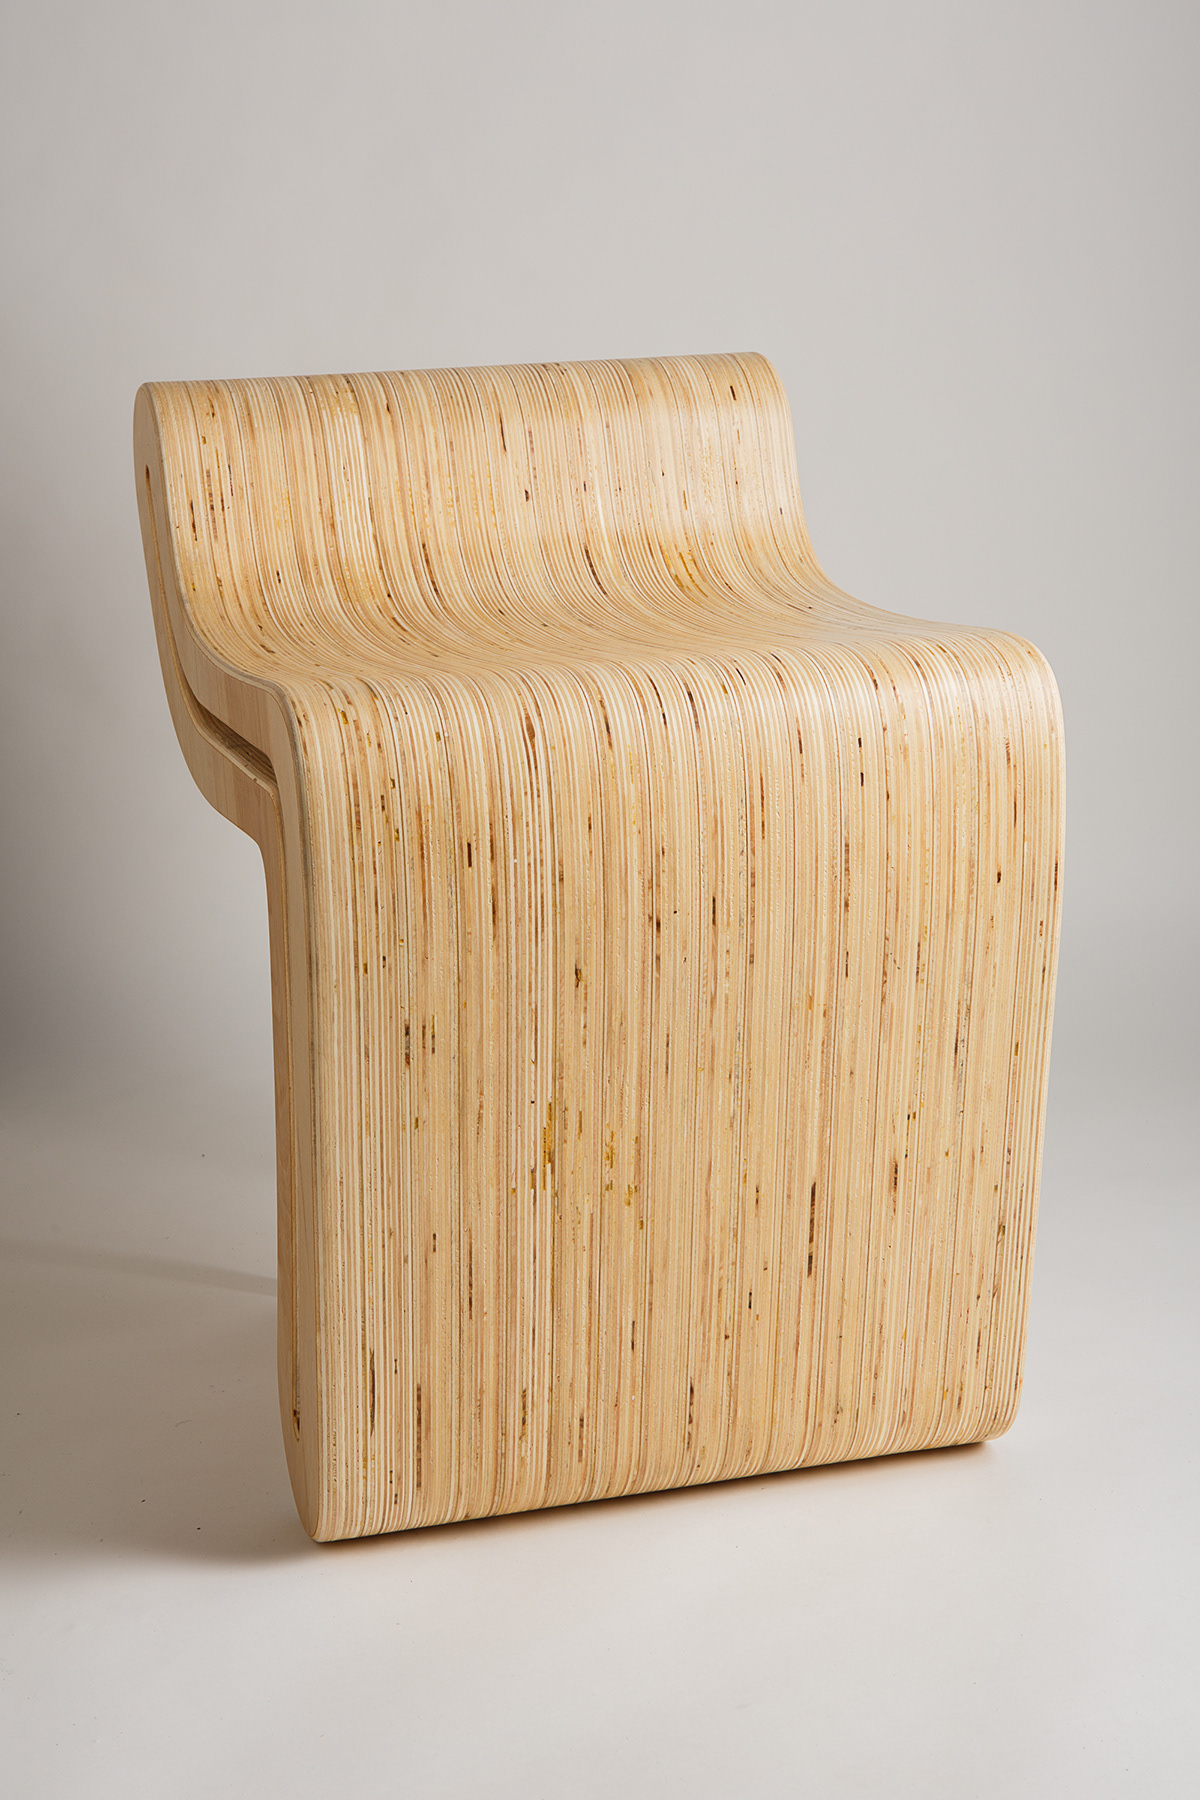 plywood stool chair cnc